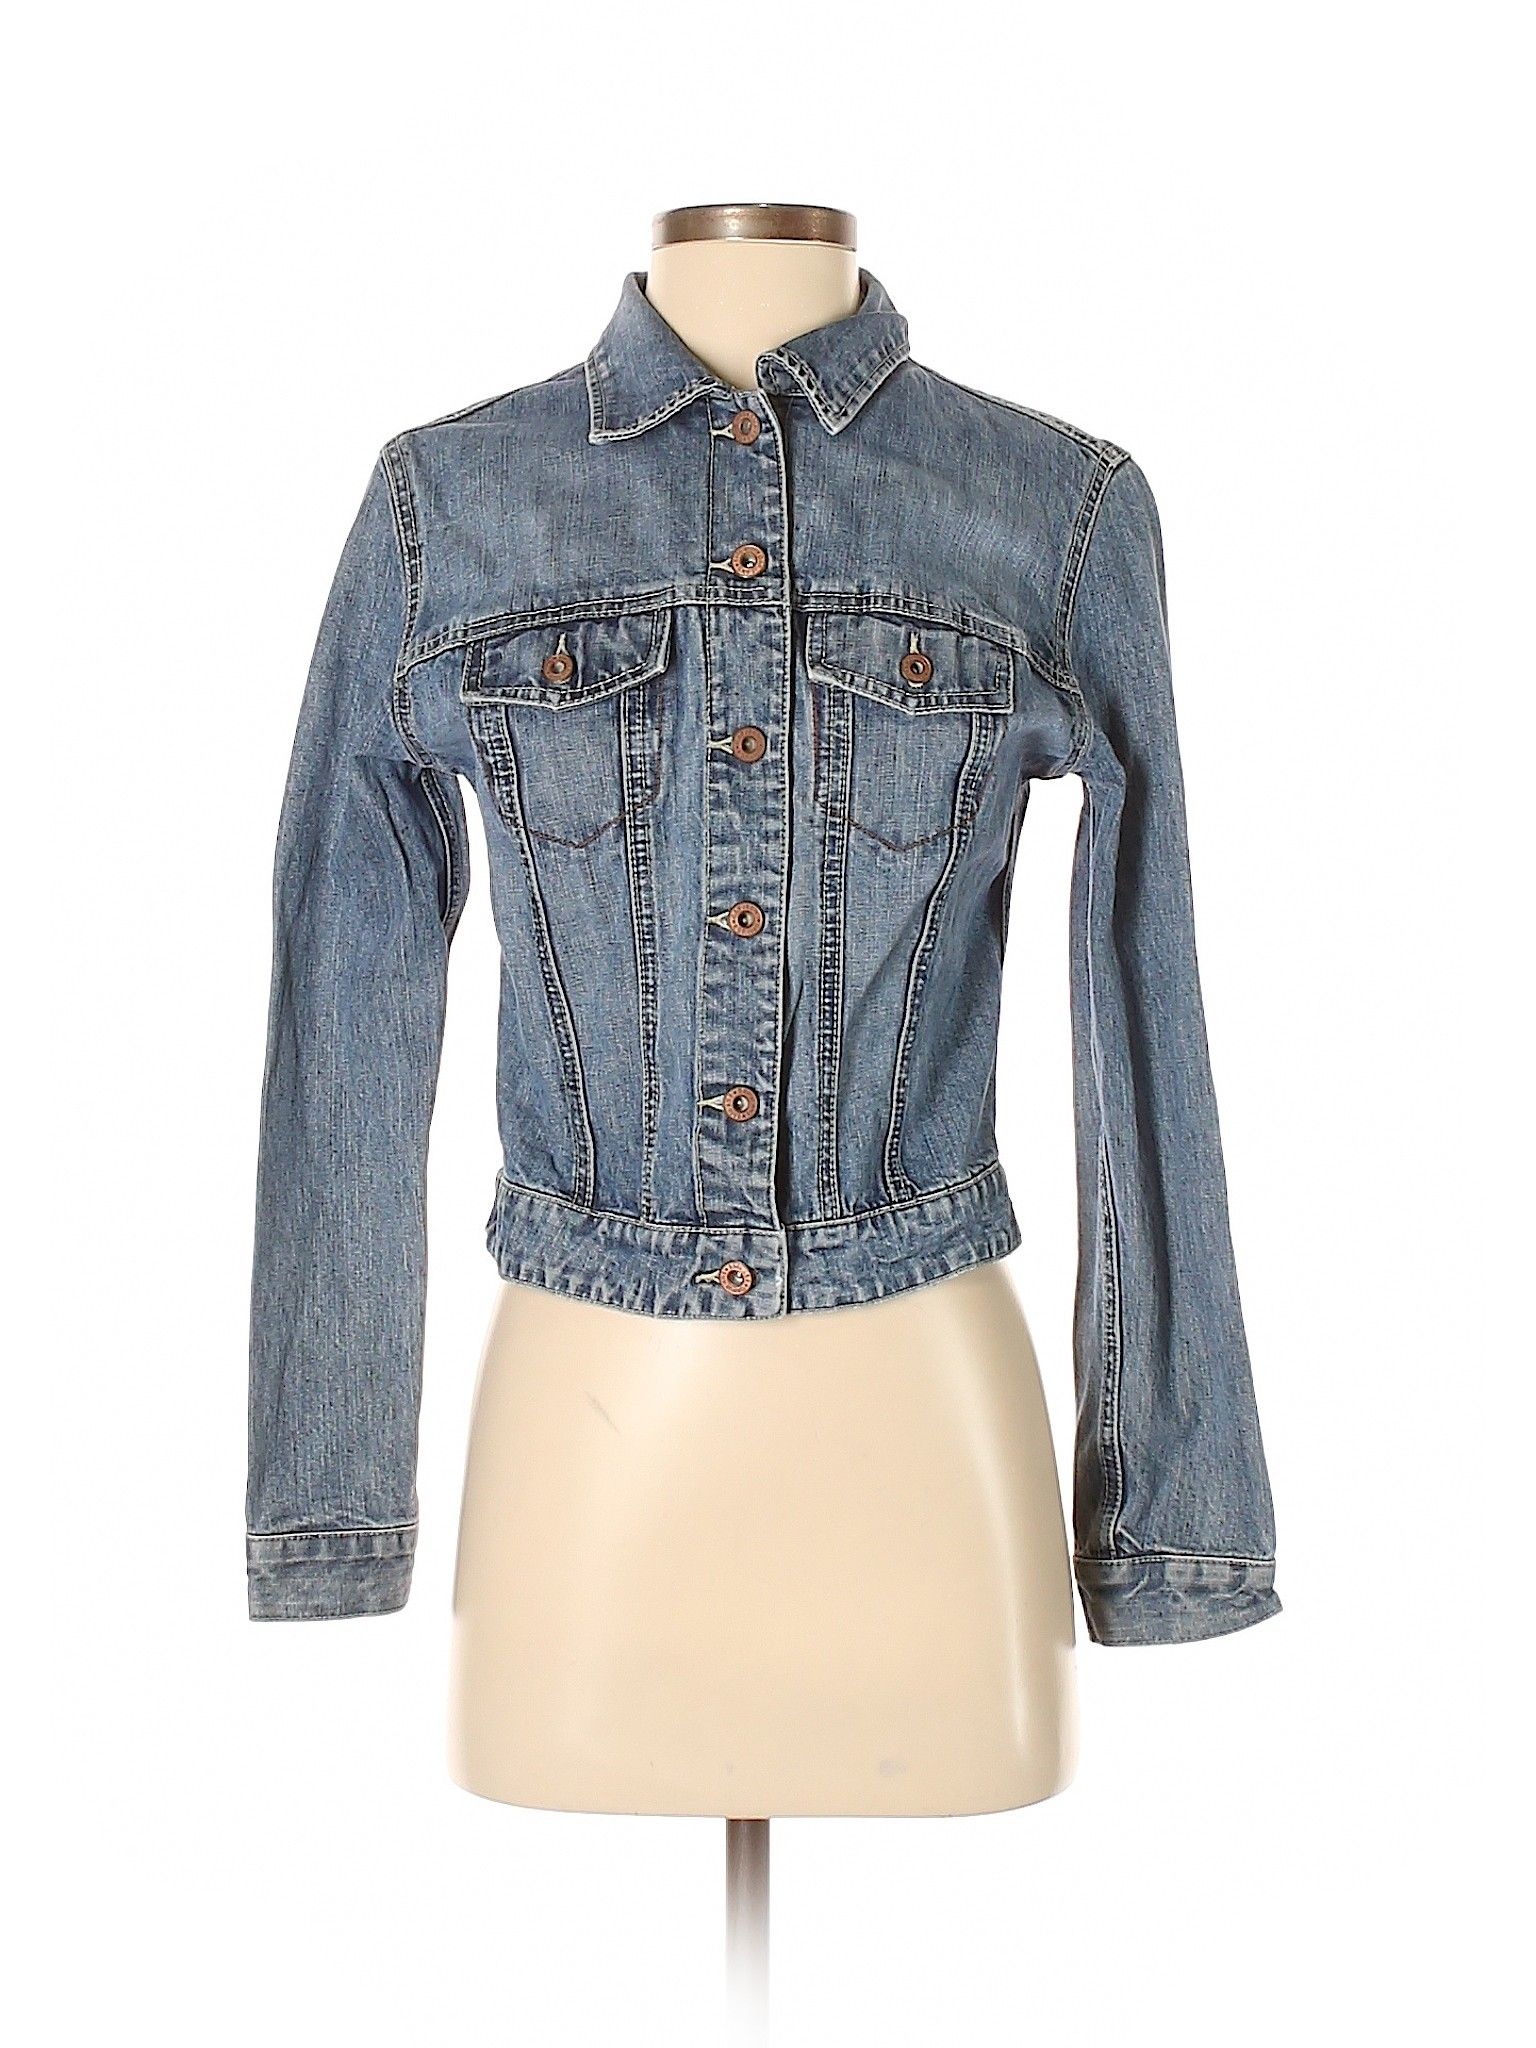 Gap Denim Jacket Size 0: Blue Women's Jackets & Outerwear - 41311217 | thredUP